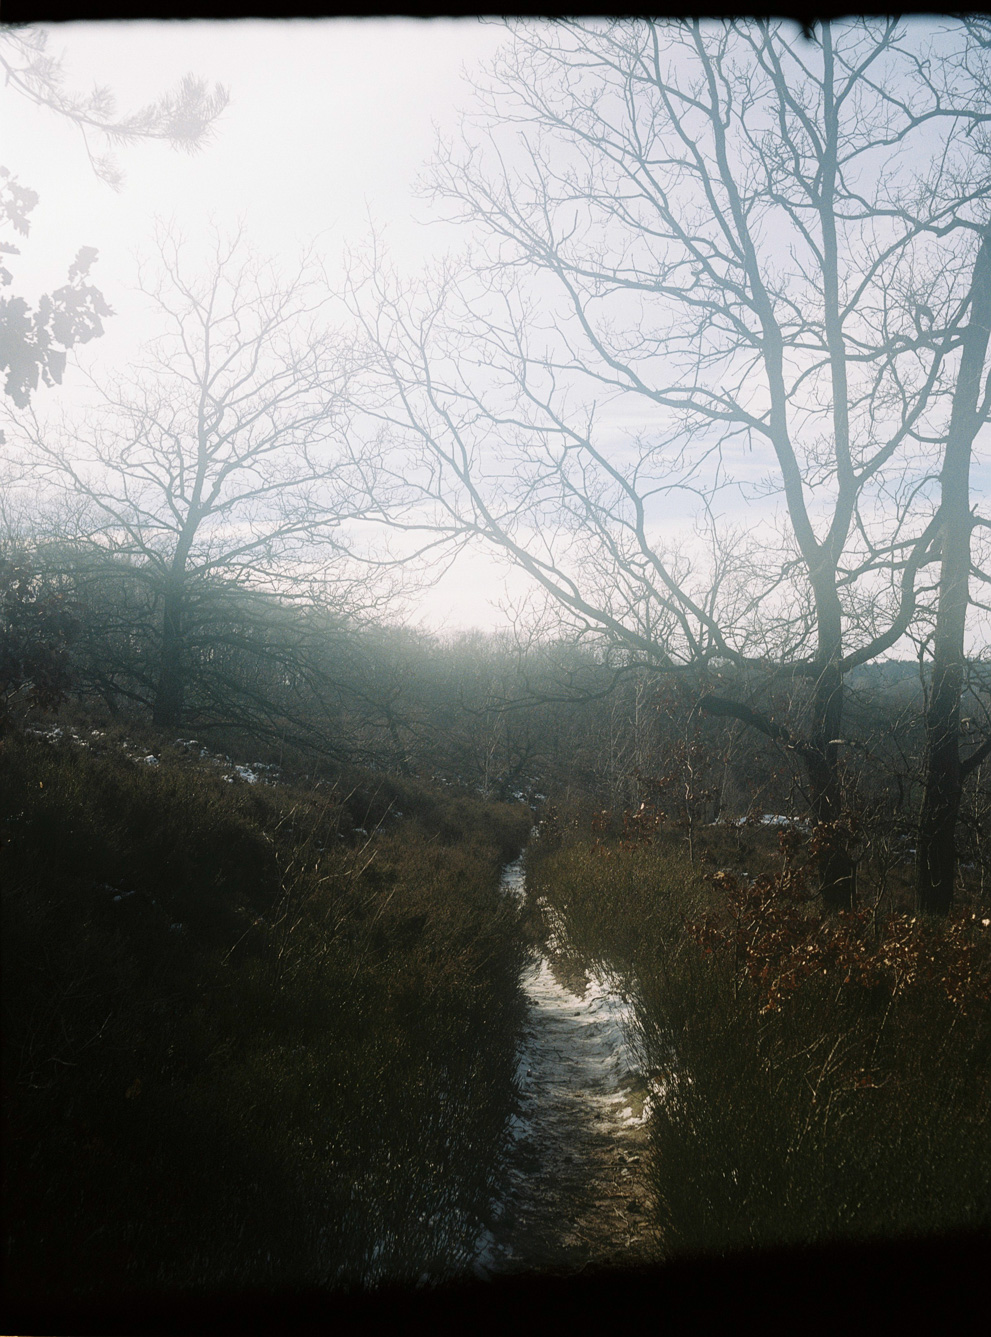 Pathway through the Heide in winter. Shot on Kodak Portra 400.